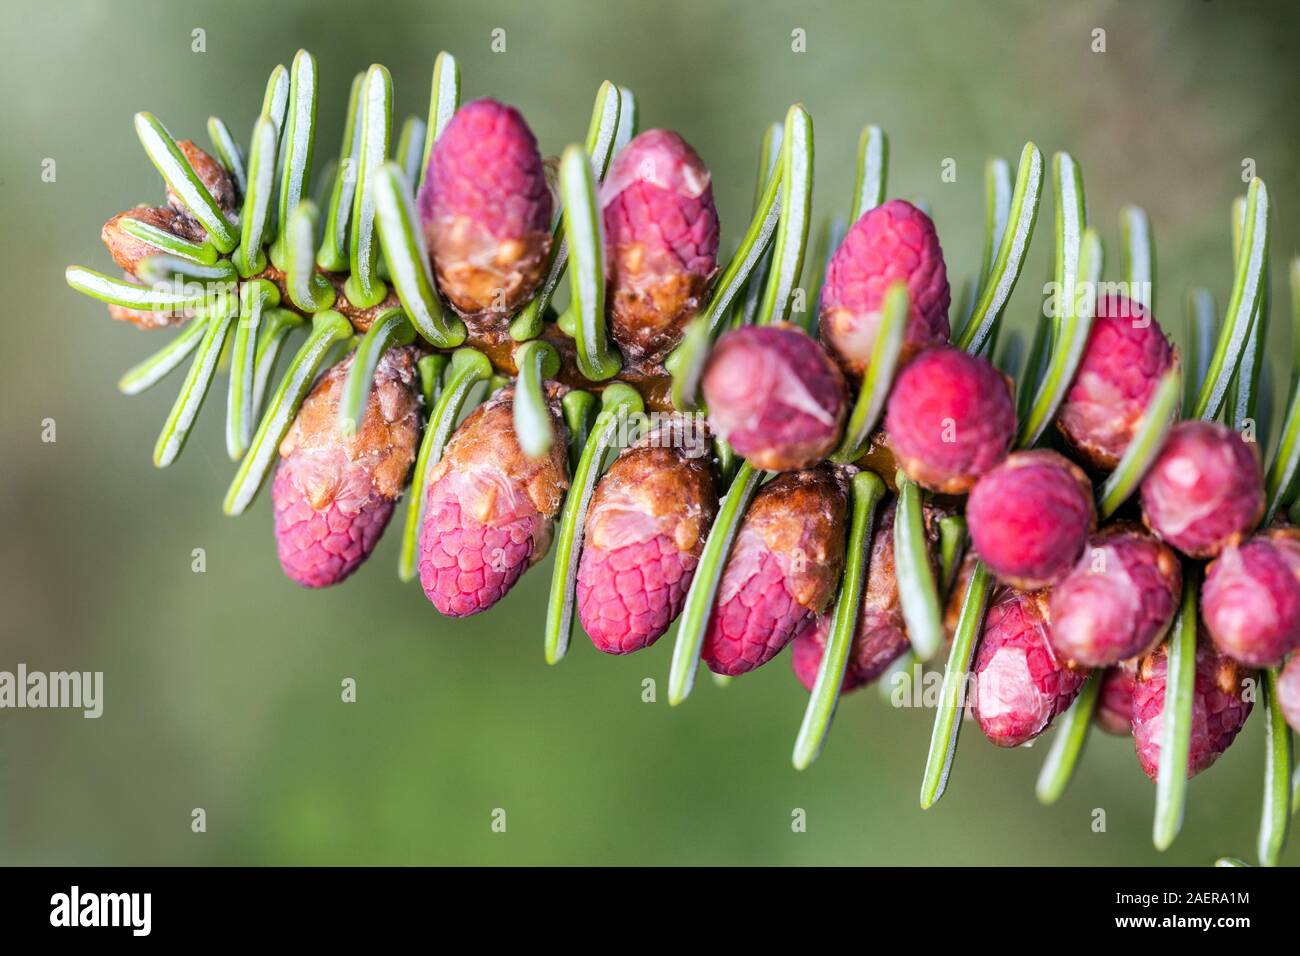 Abies pinsapo ' Fastigiata ' Spanish fir spring cones shoots close up Stock Photo